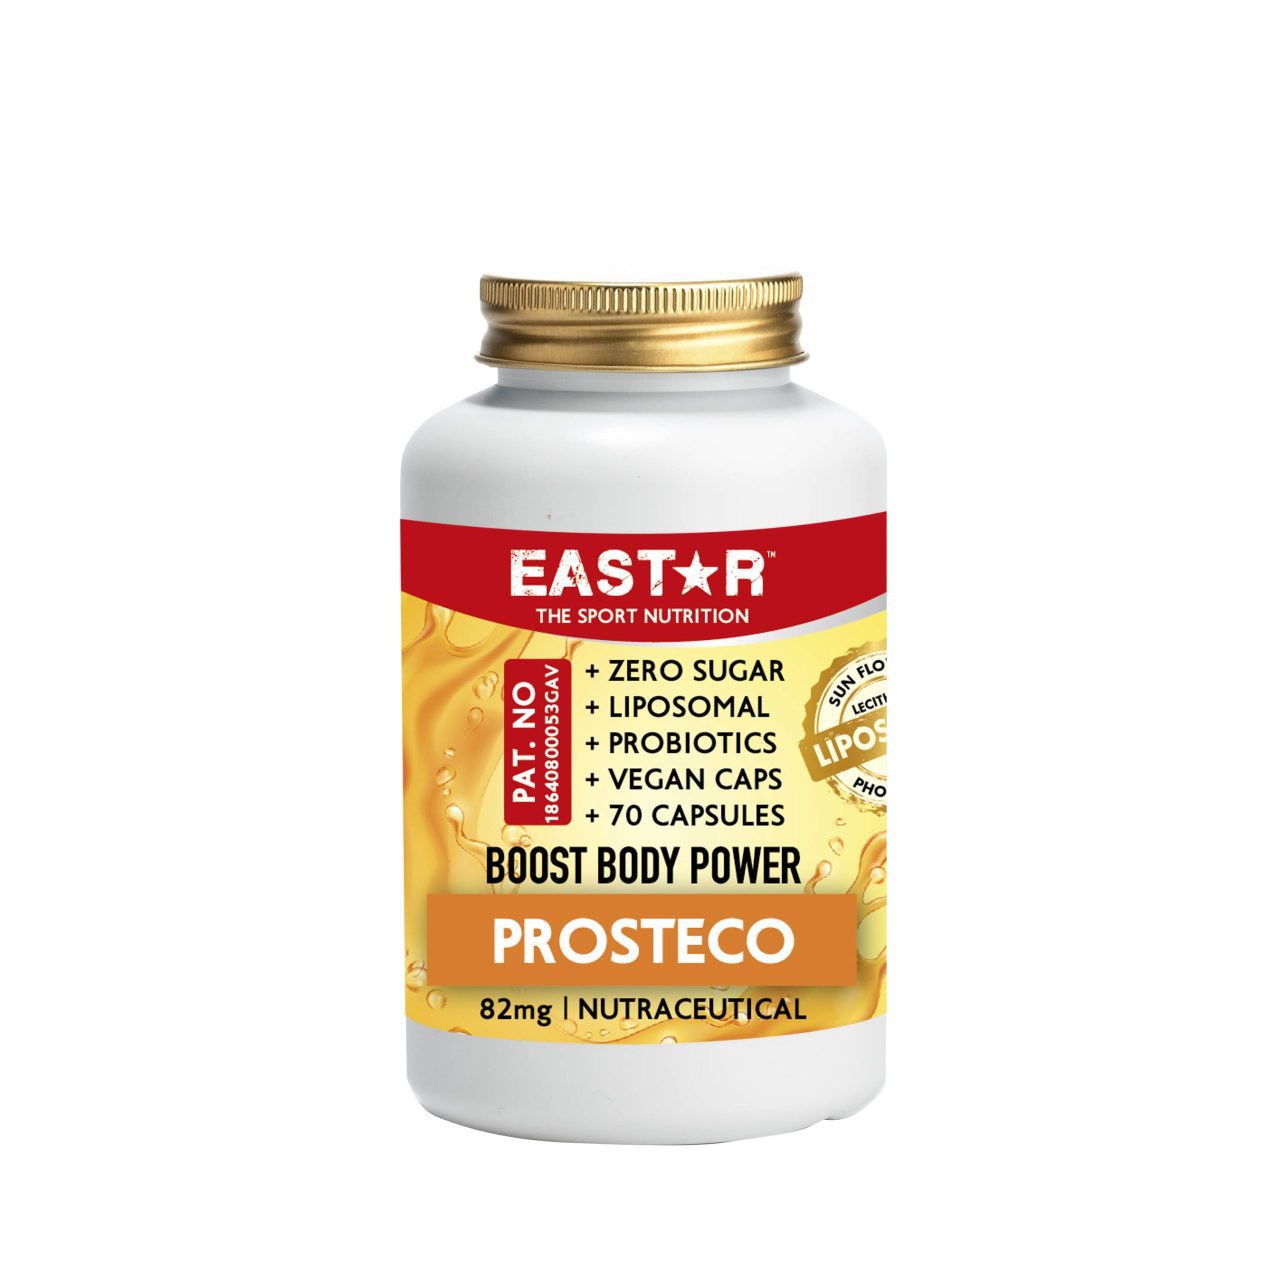 Eastar_proPROSTECO - Amhes Pharma